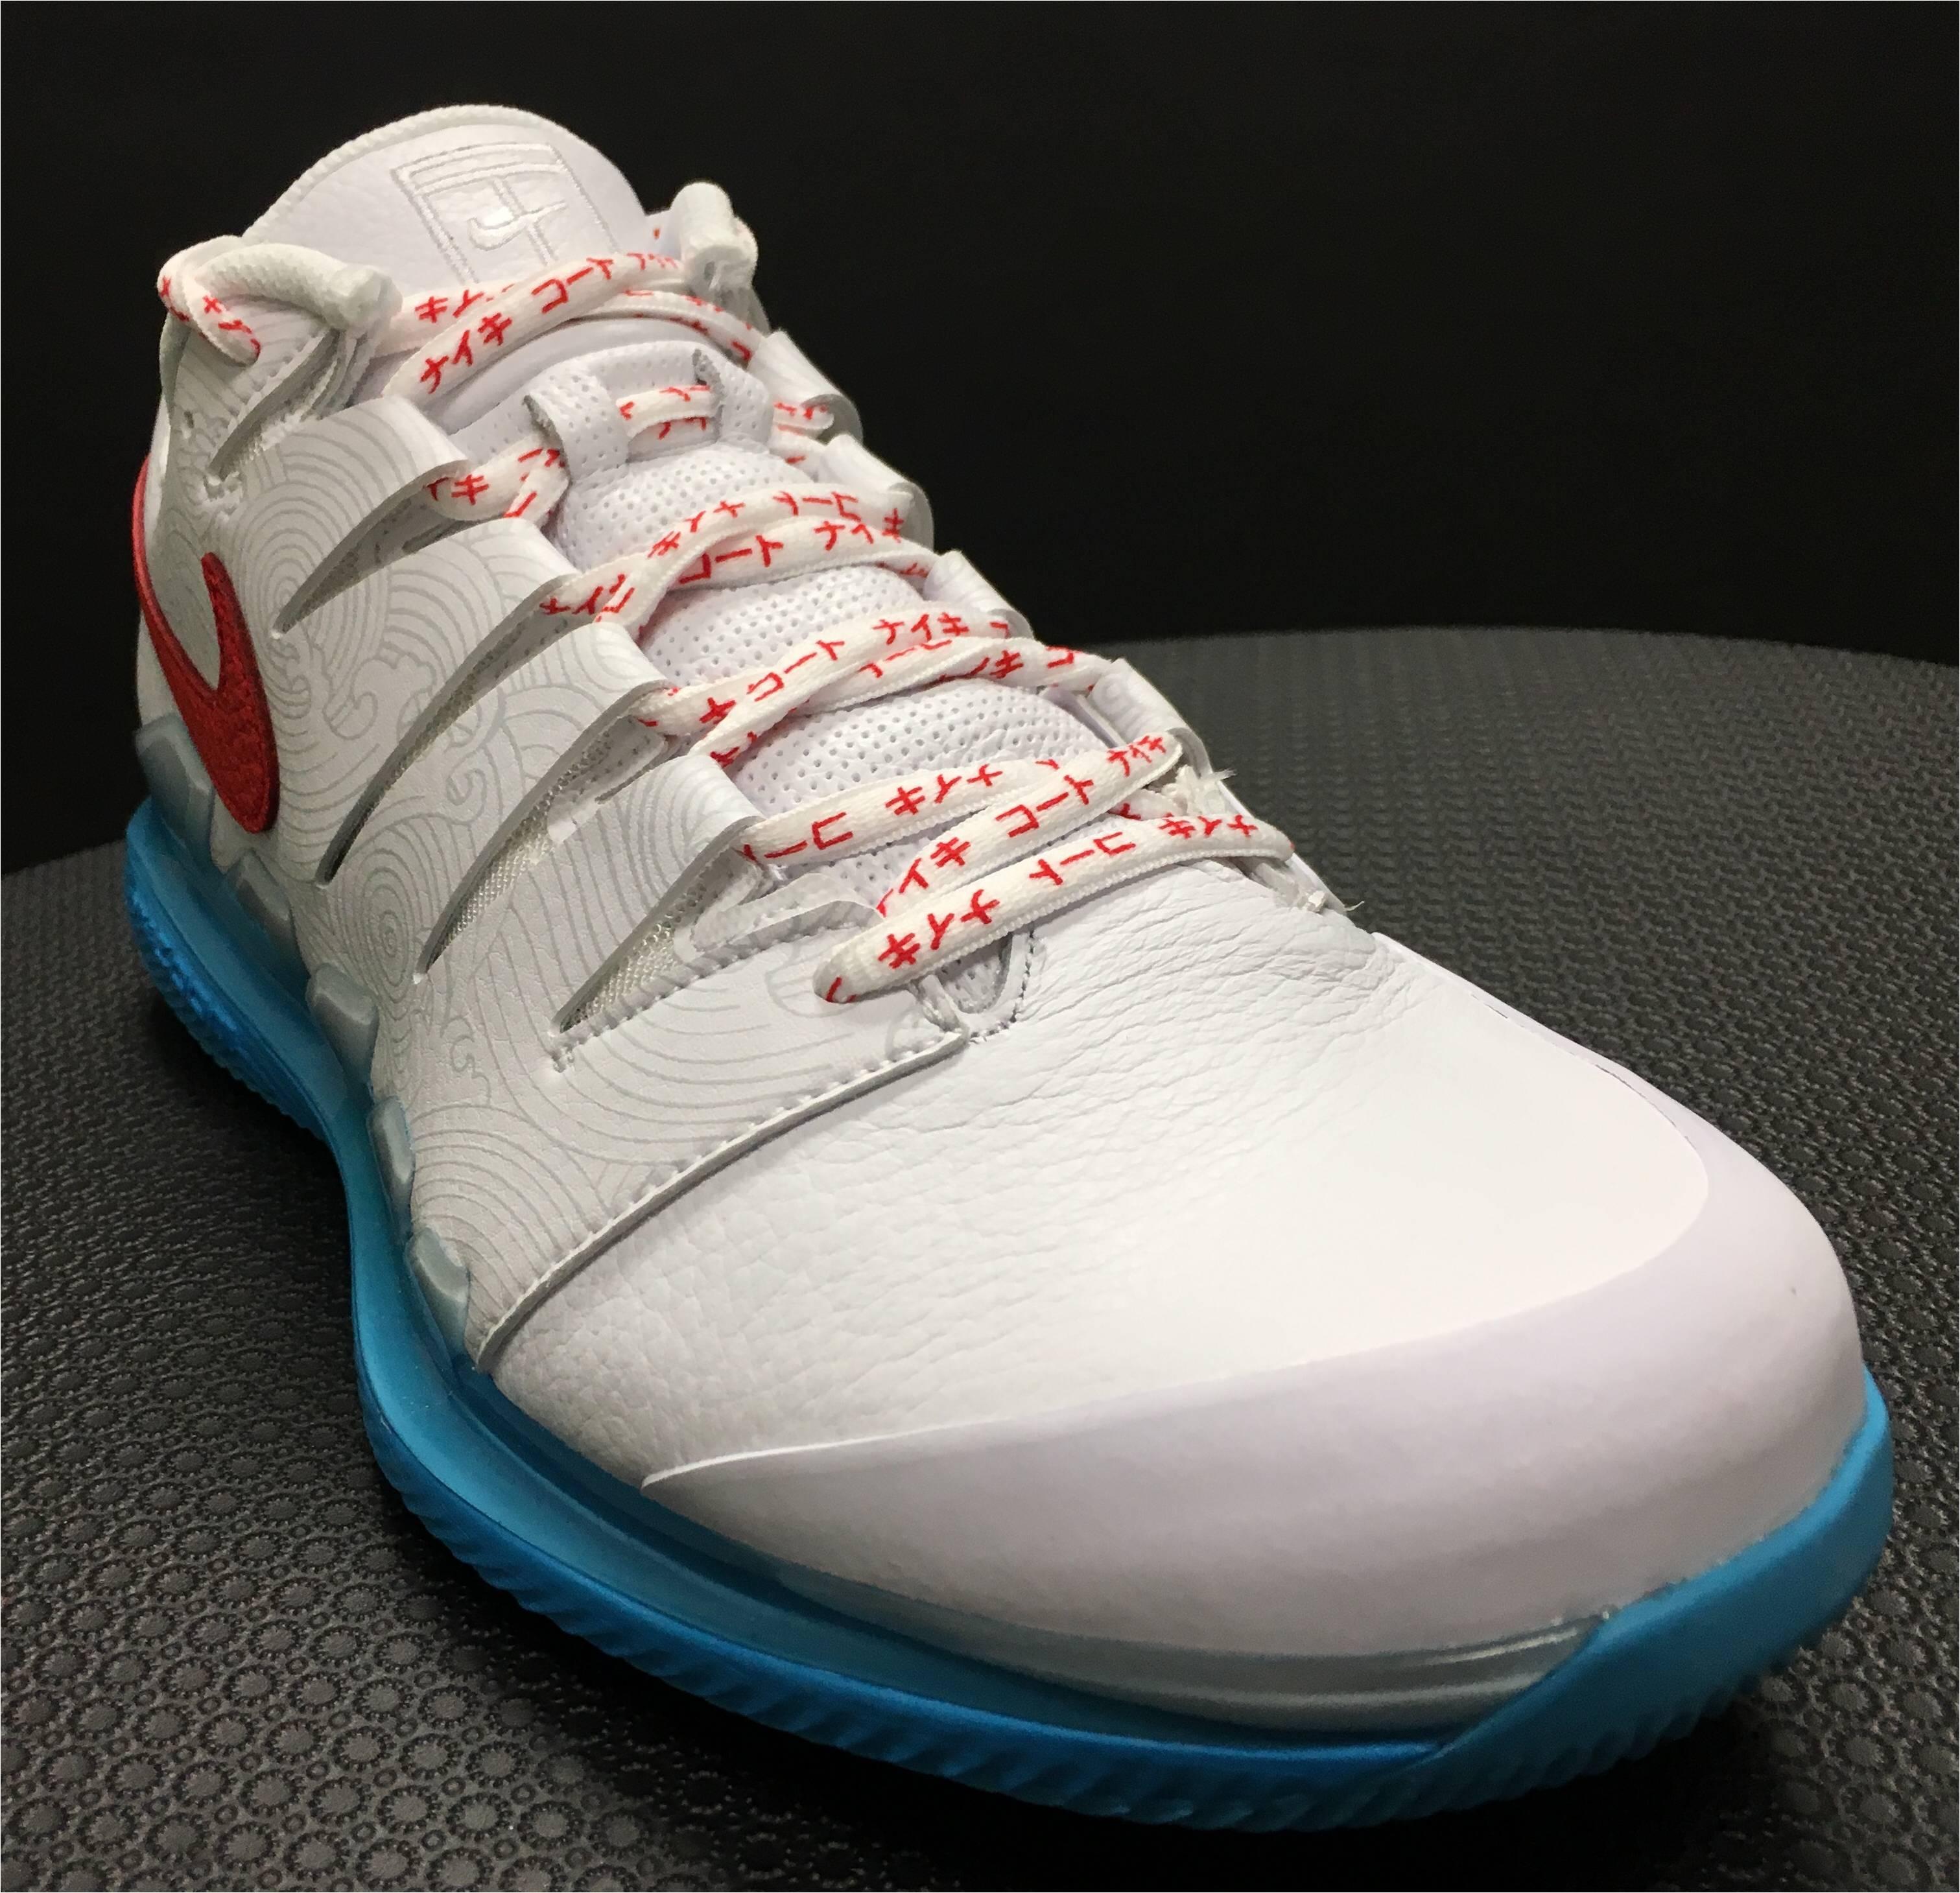 Encogerse de hombros Parásito bufanda The Inspiration Behind Nike's Kei Nishikori Vapor X Tennis Shoe - TENNIS  EXPRESS BLOG